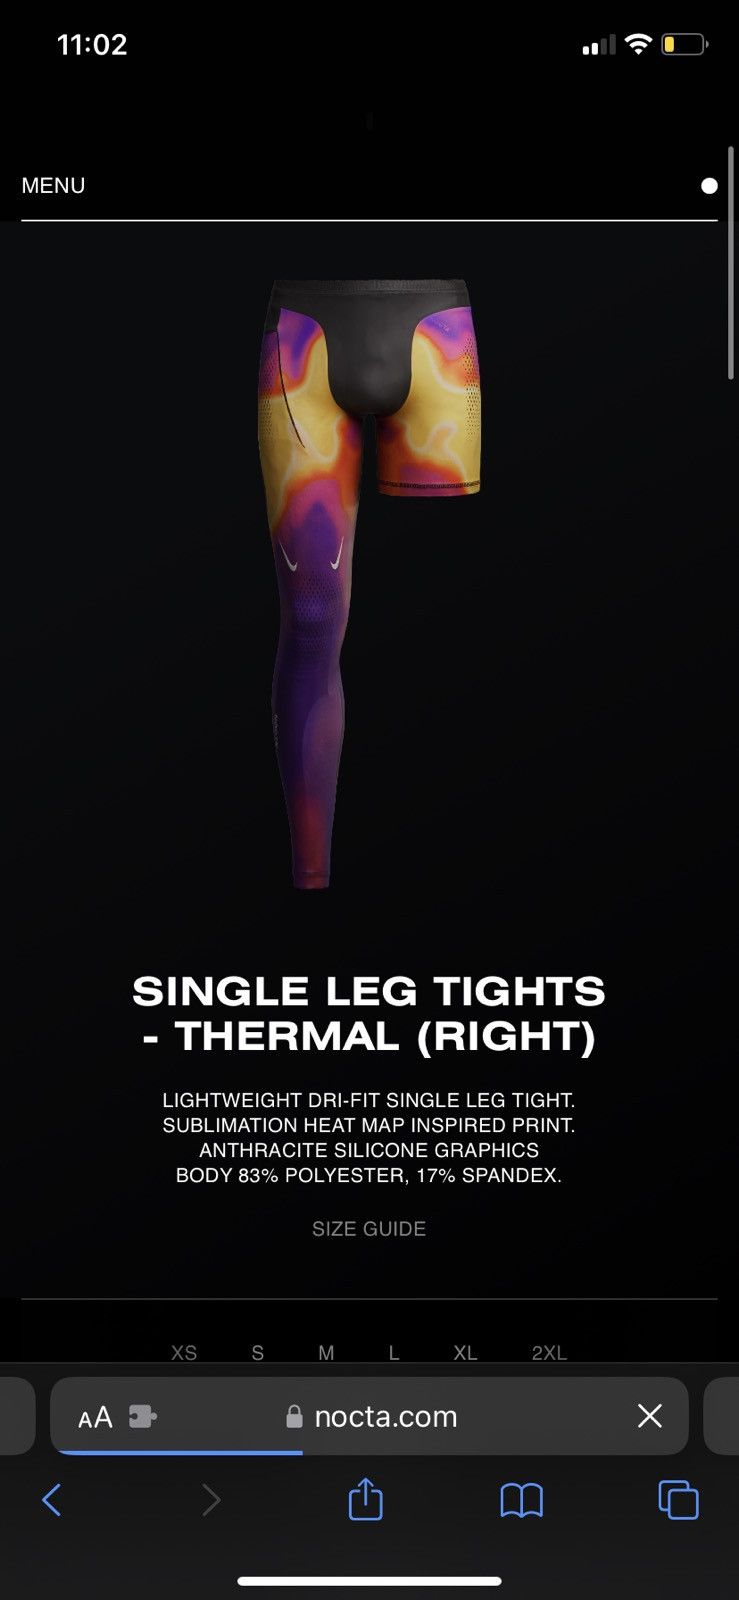 Nike NOCTA - DRAKE - NIKE. SINGLE LEG TIGHTS - THERMAL (RIGHT